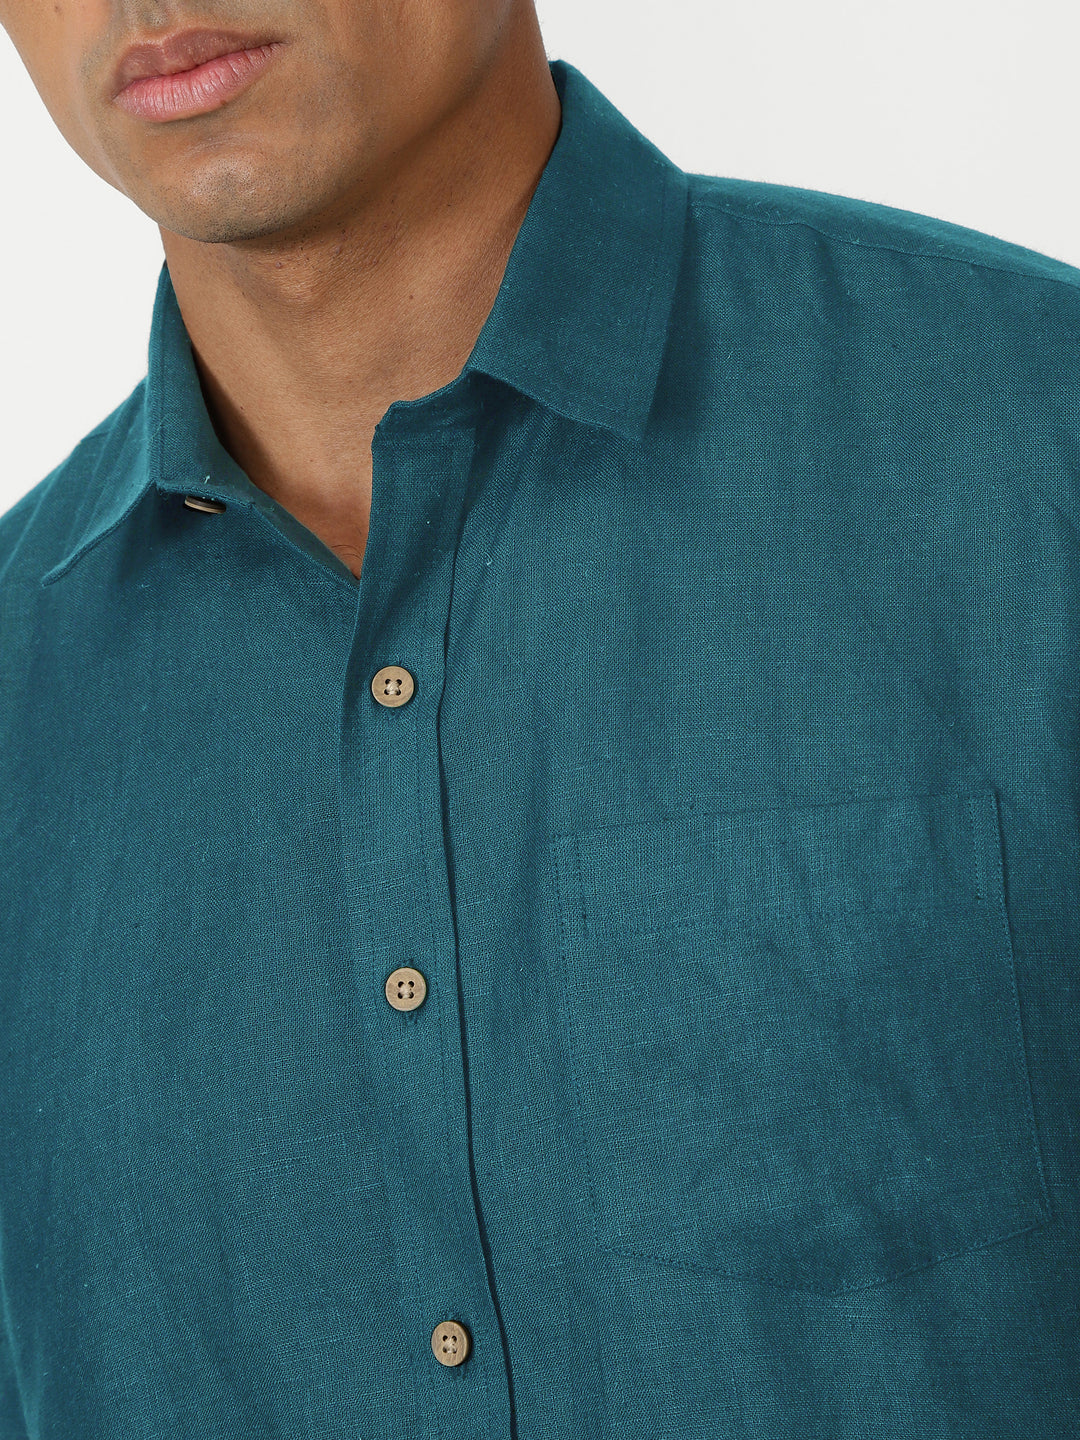 Harvey - Pure Linen Half Sleeve Shirt - Peacock Blue